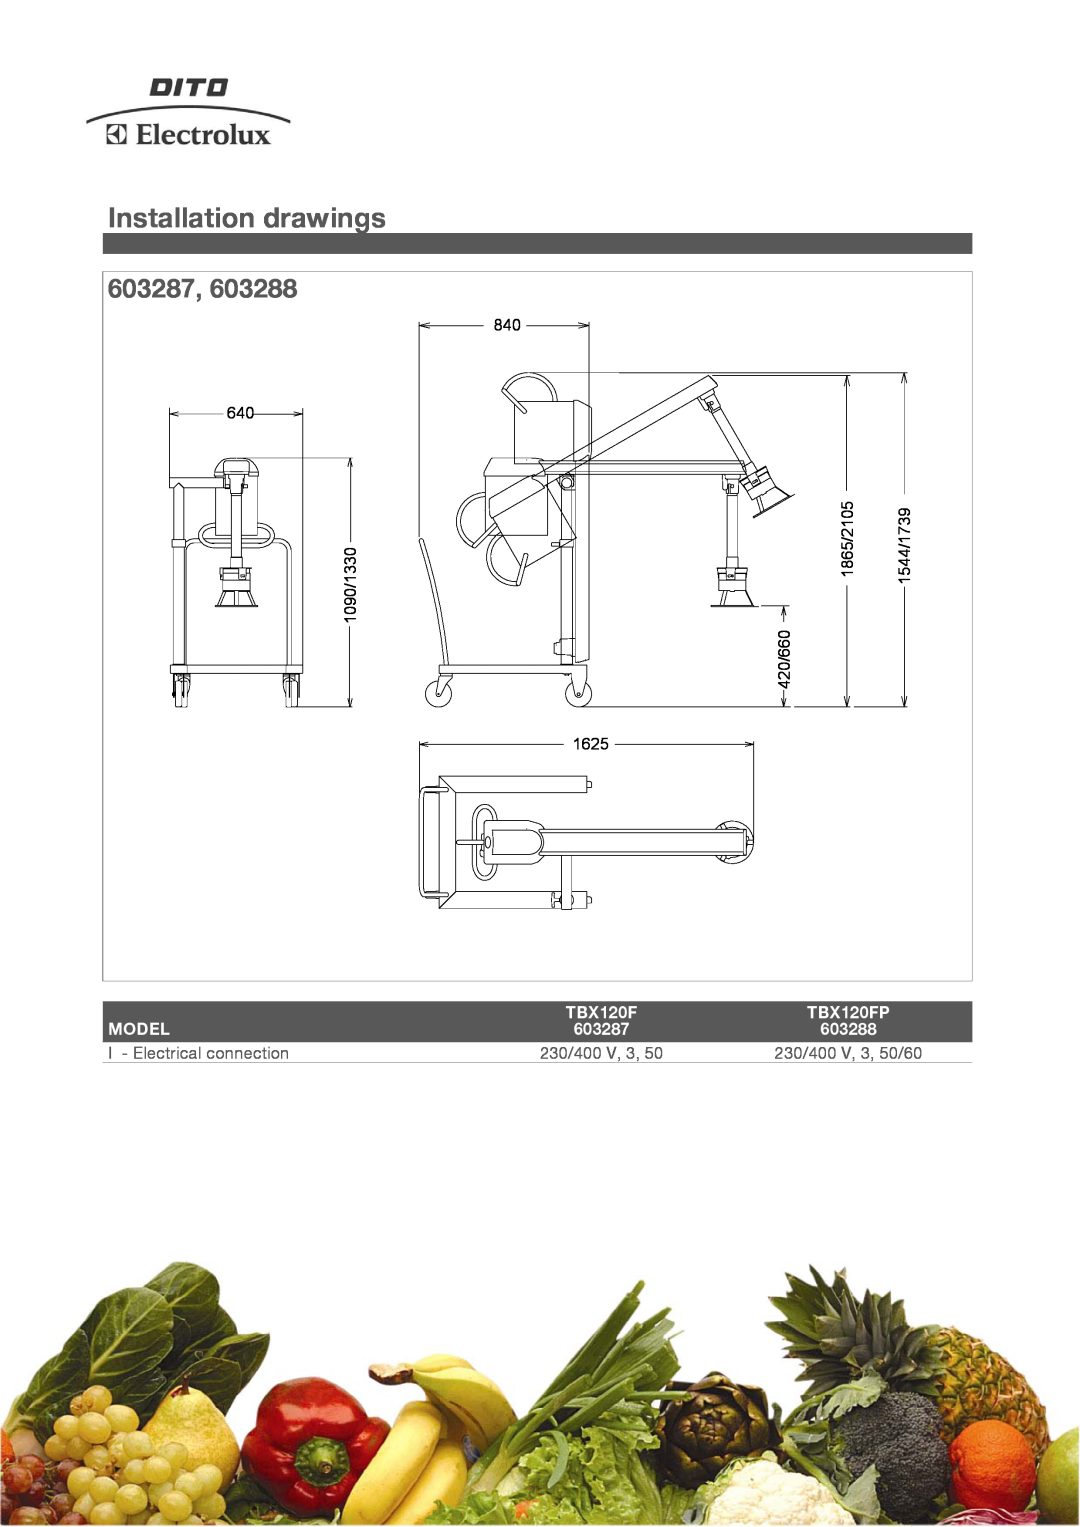 Electrolux 603287 manual Installation drawings, 1090/1330, 1865/2105, 1544/1739, 420/660, 1625, TBX120FP, Model, 603288 